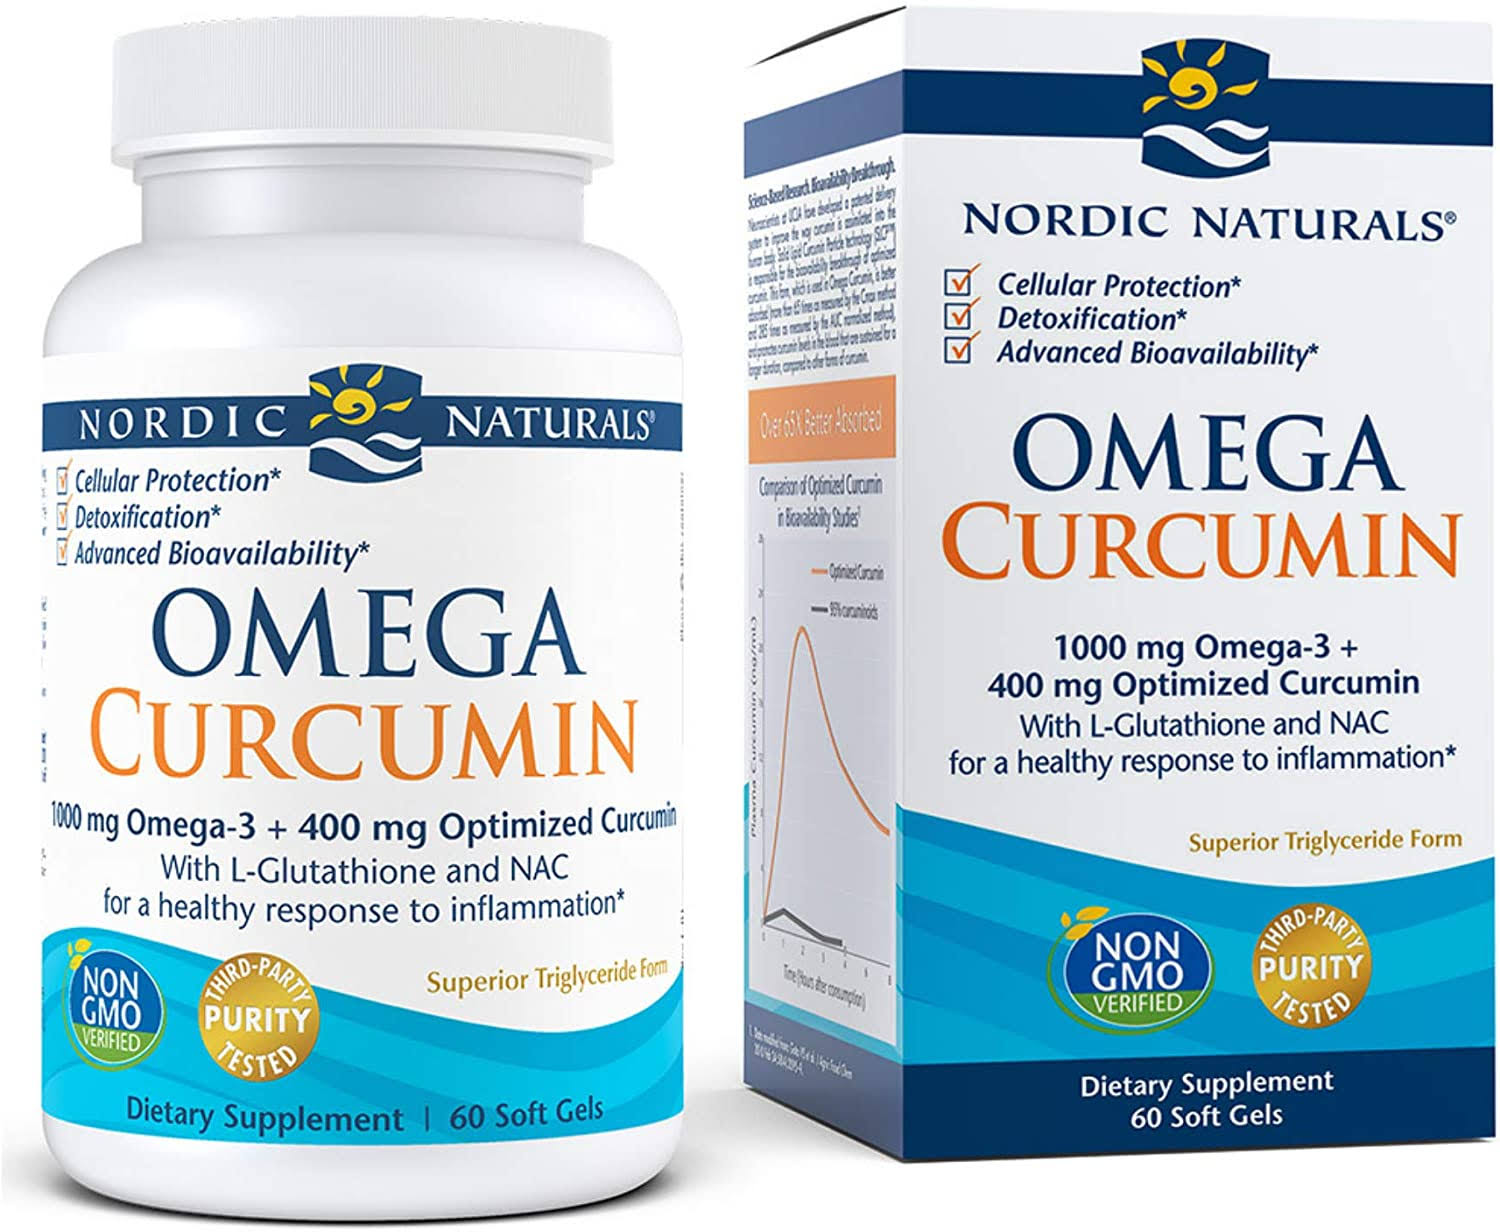 Nordic Naturals Omega Curcumin Dietary Supplement - 1250mg, 60ct